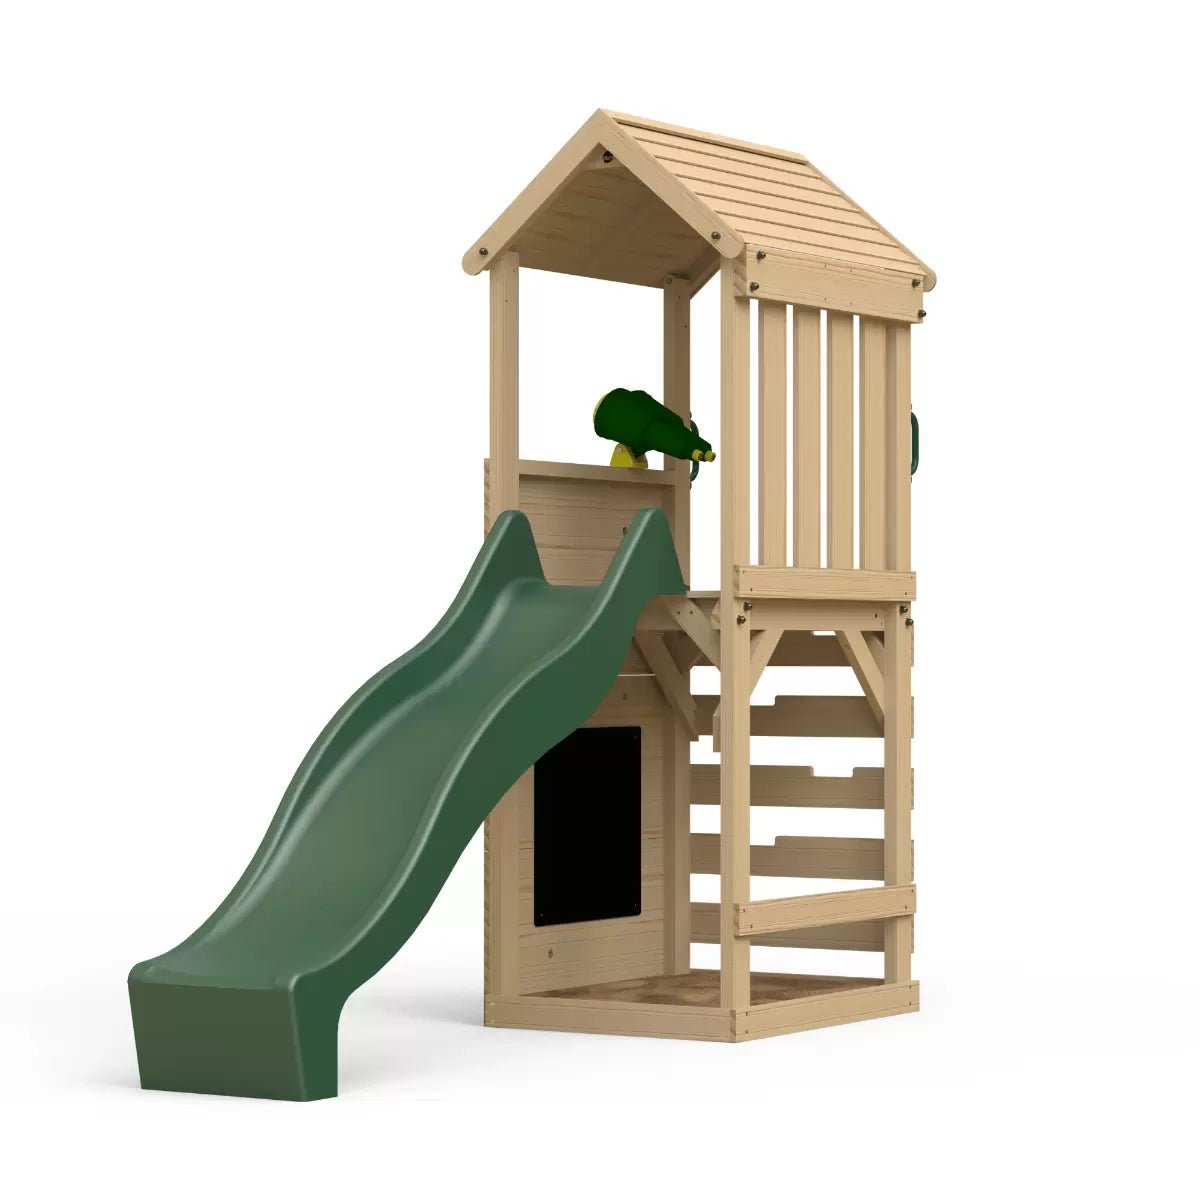 Plum Lookout Tower Play Centre - Outdoor Fun Awaits!